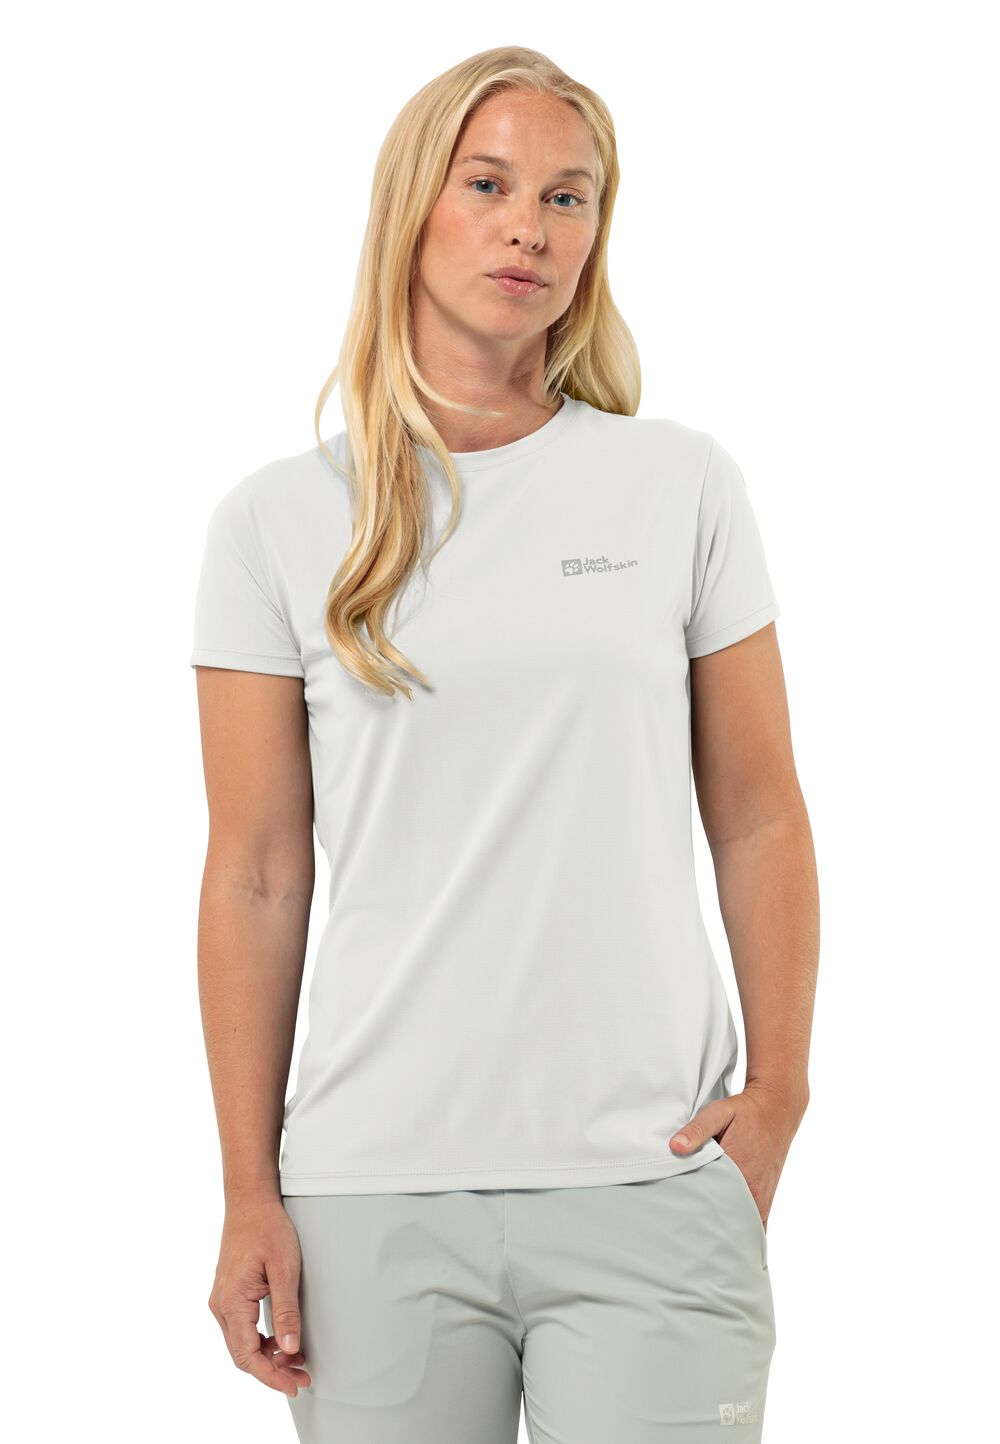 Jack Wolfskin Prelight Trail T-Shirt Women Functioneel shirt Dames L wit stark white